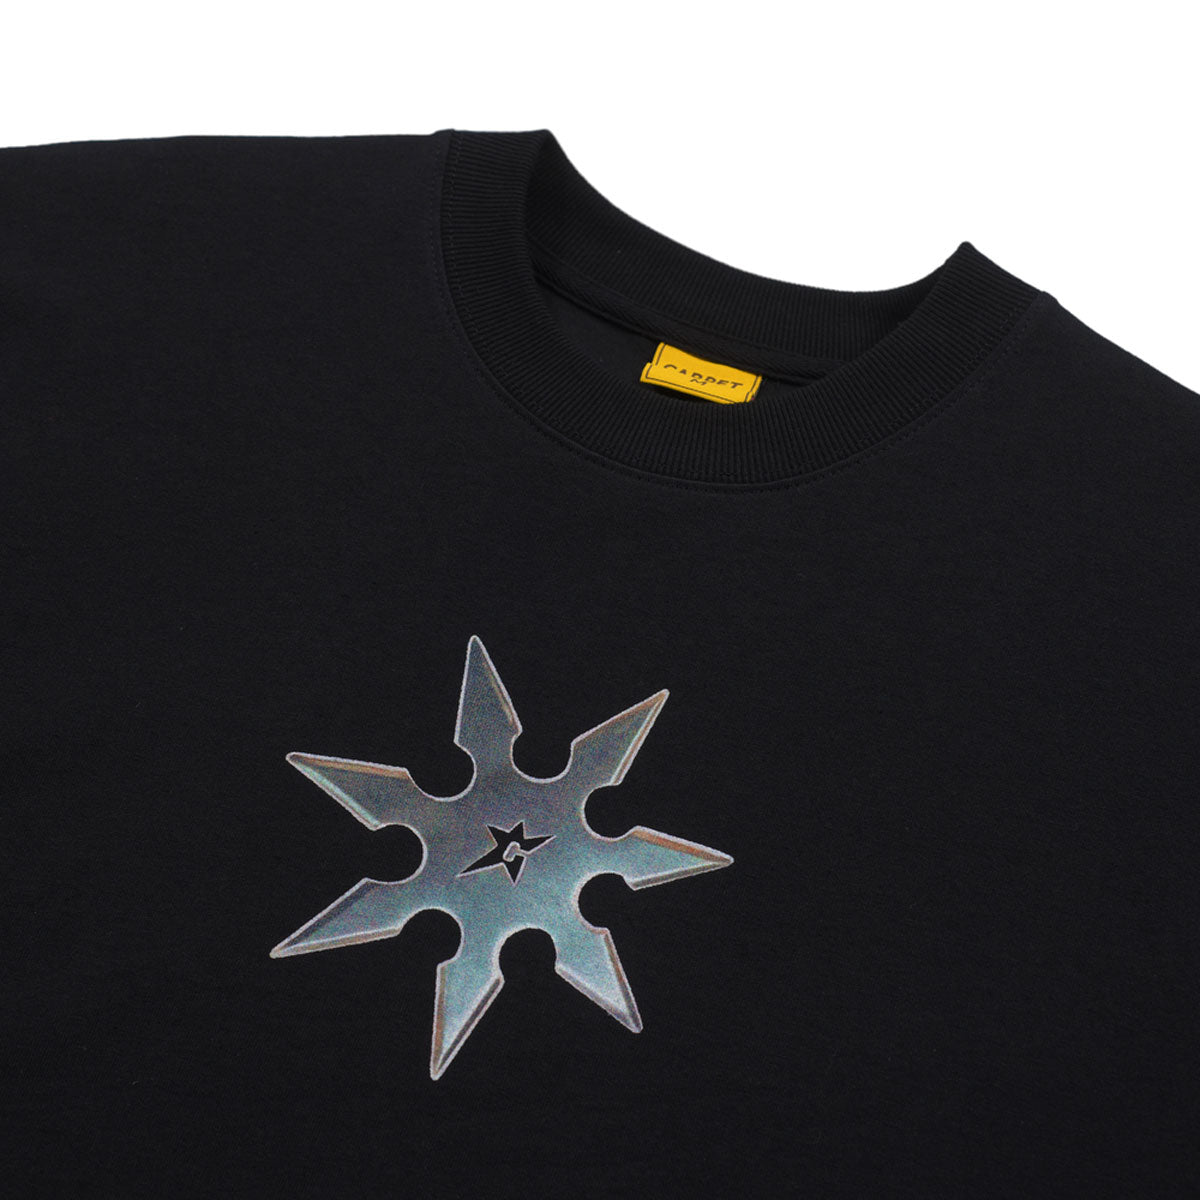 Carpet Company Throwing Star T-Shirt - Black image 2